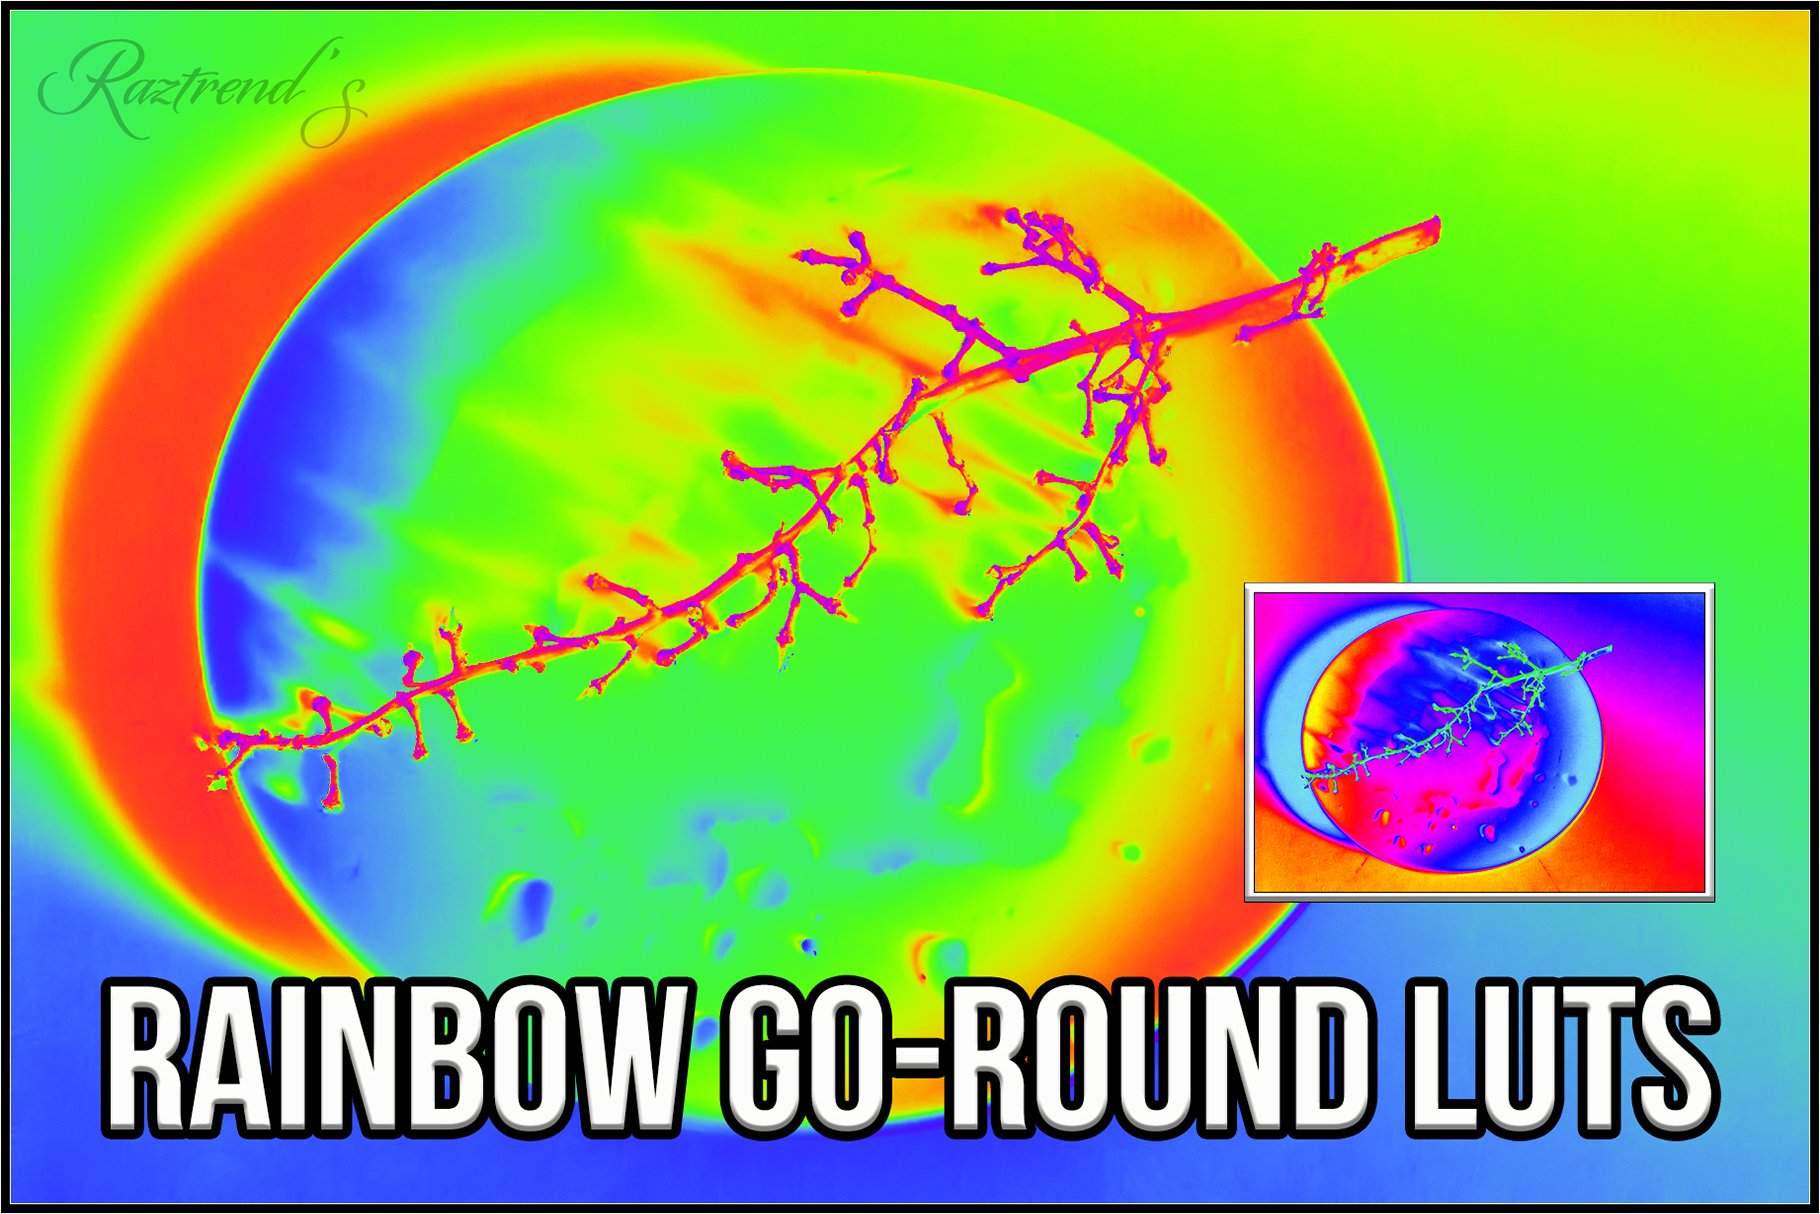 Rainbow Go-Round LUTscover image.